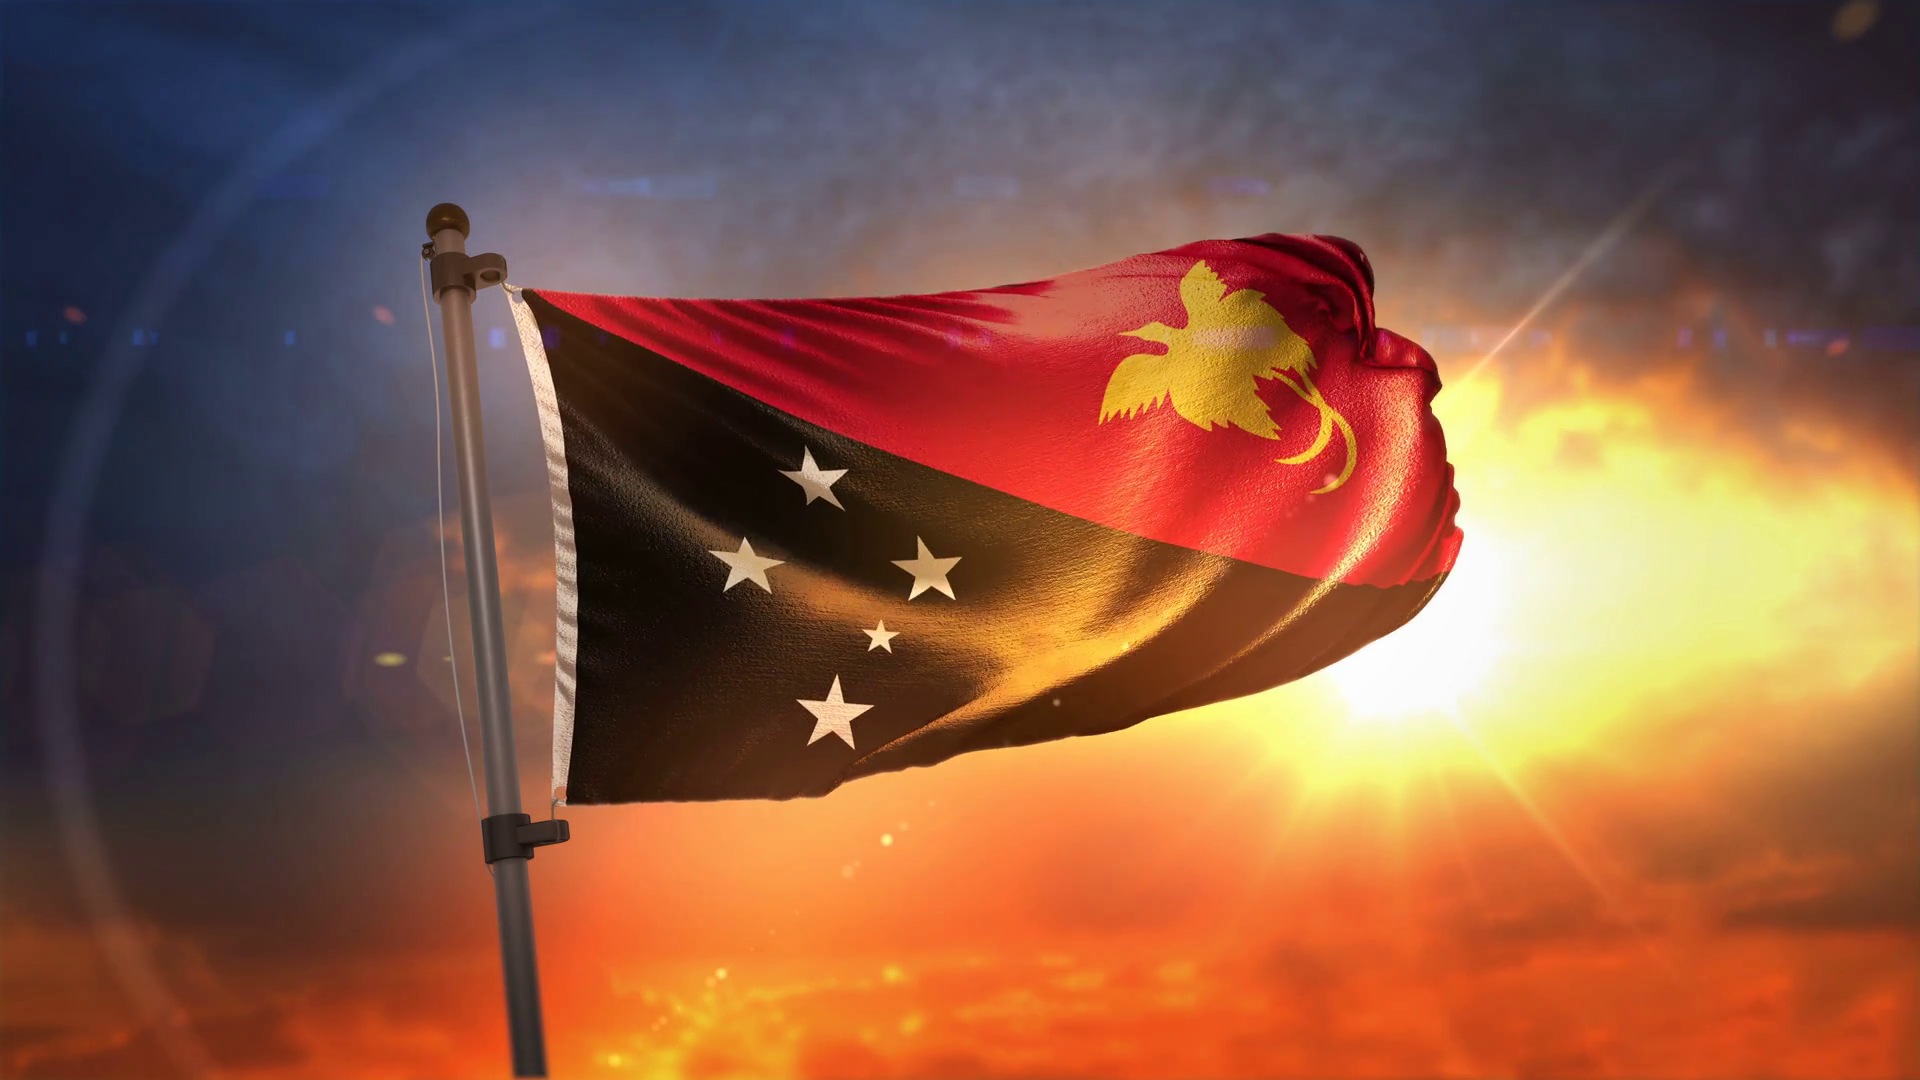 Free download Papua New Guinea Flag Backlit At Beautiful Sunrise